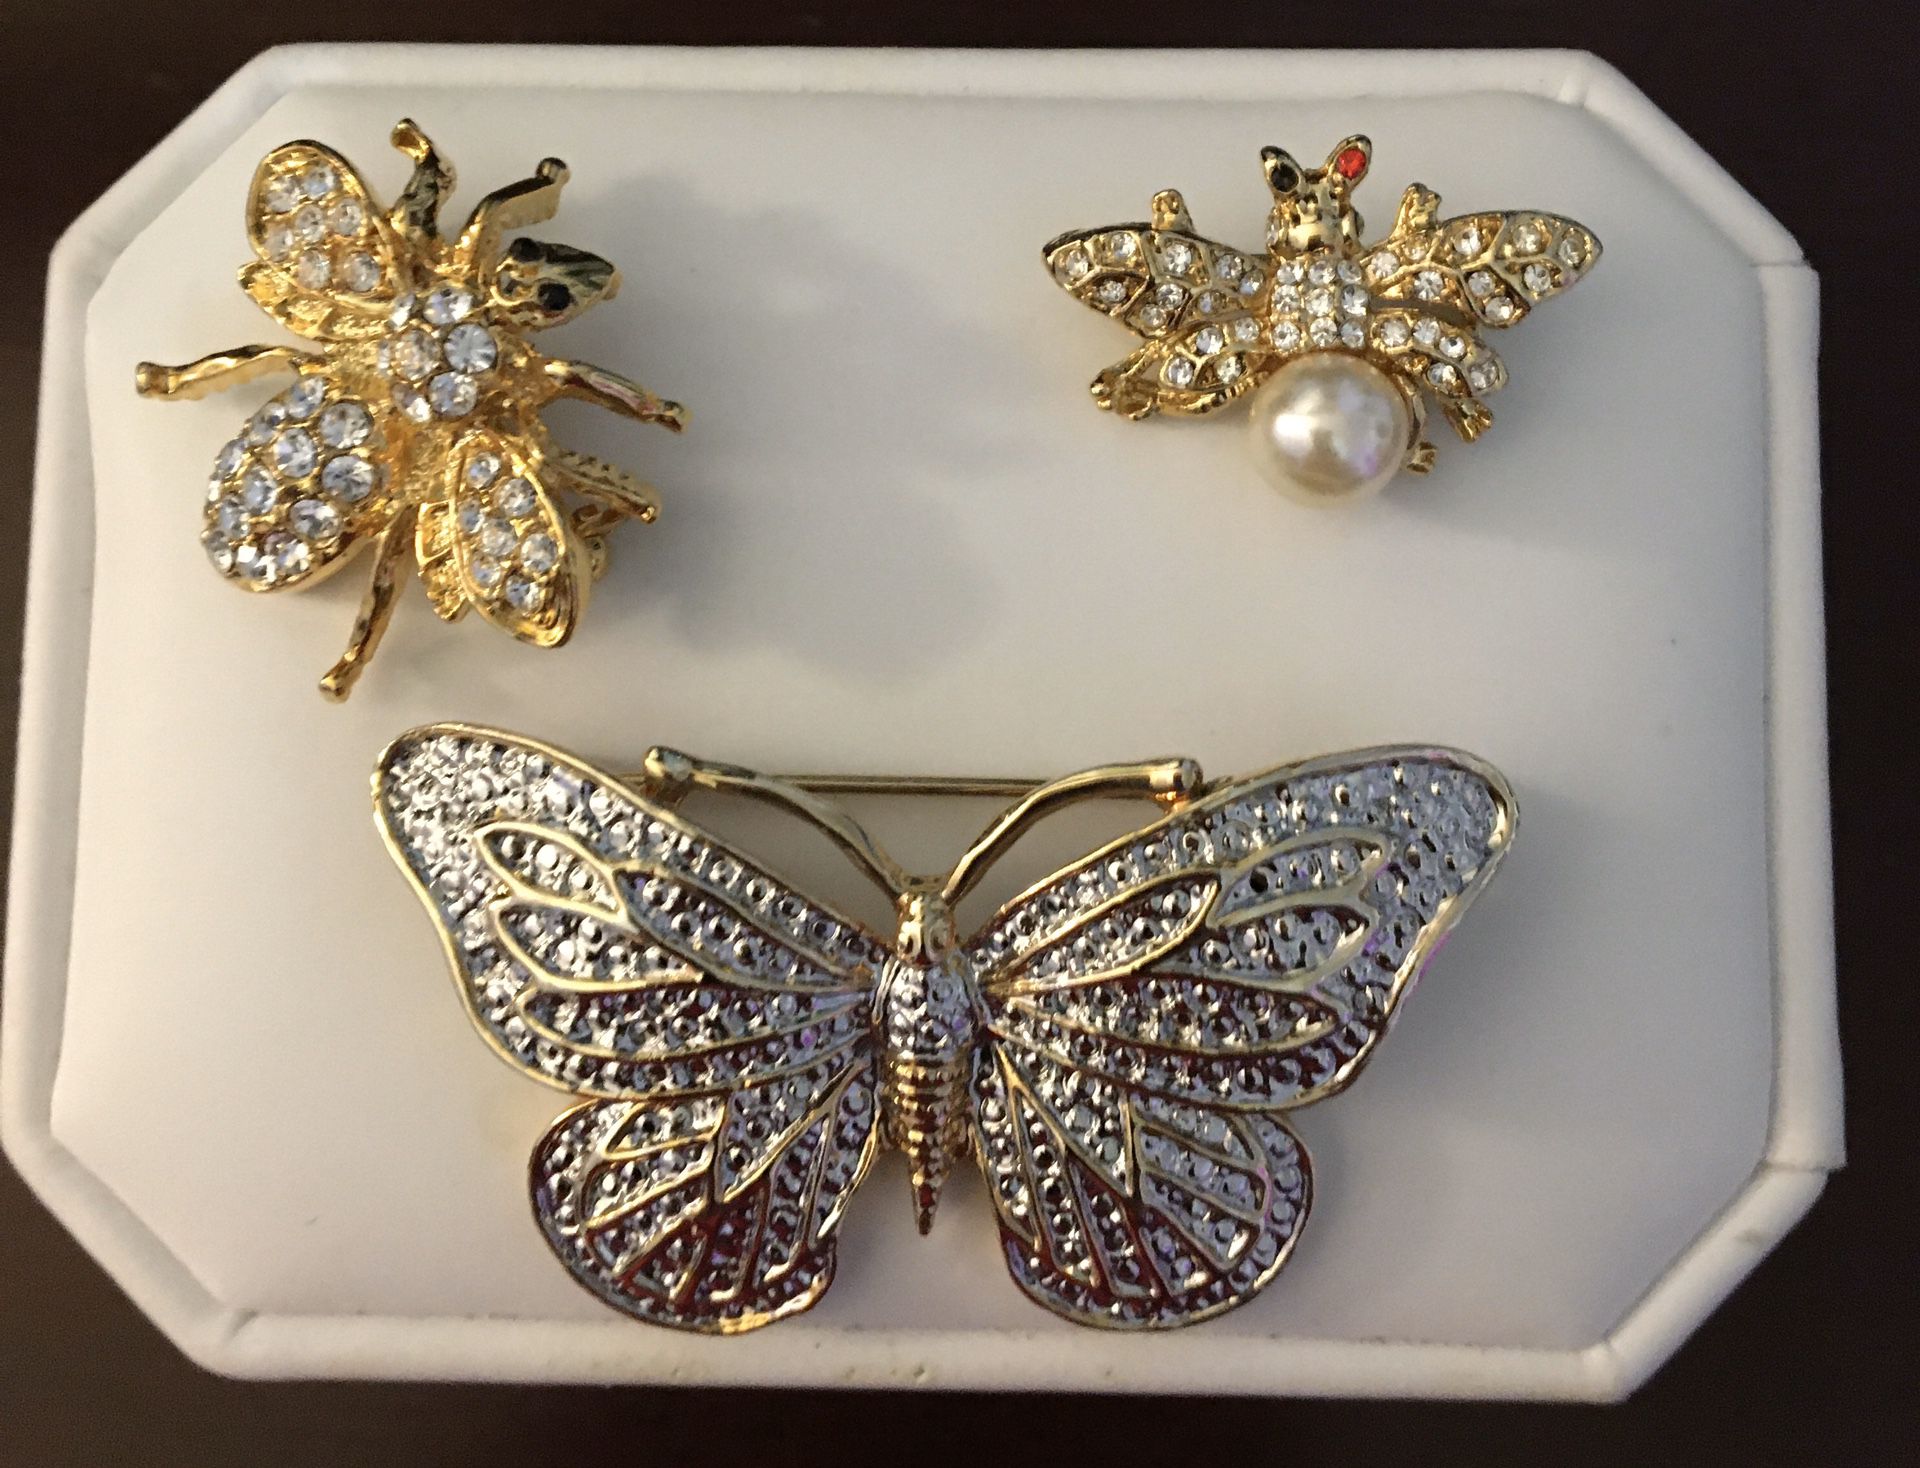 Three piece brooch jewelry set.